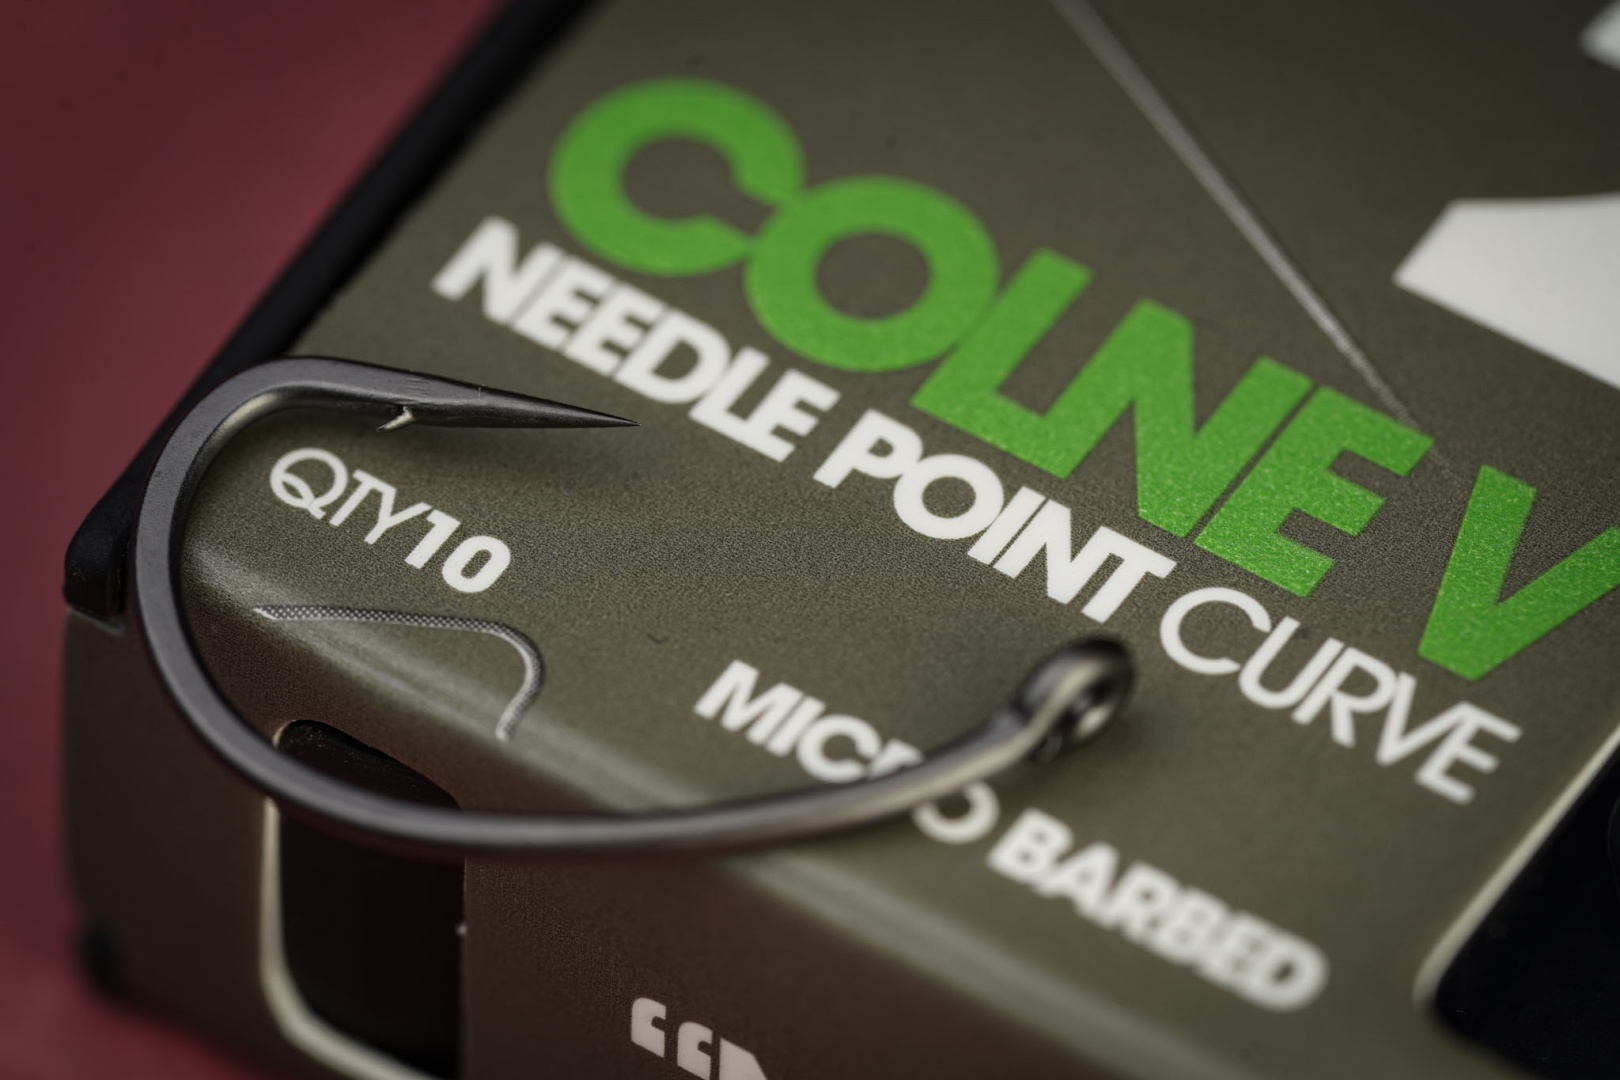 One More Cast COLNE-V Needle Point Hooks